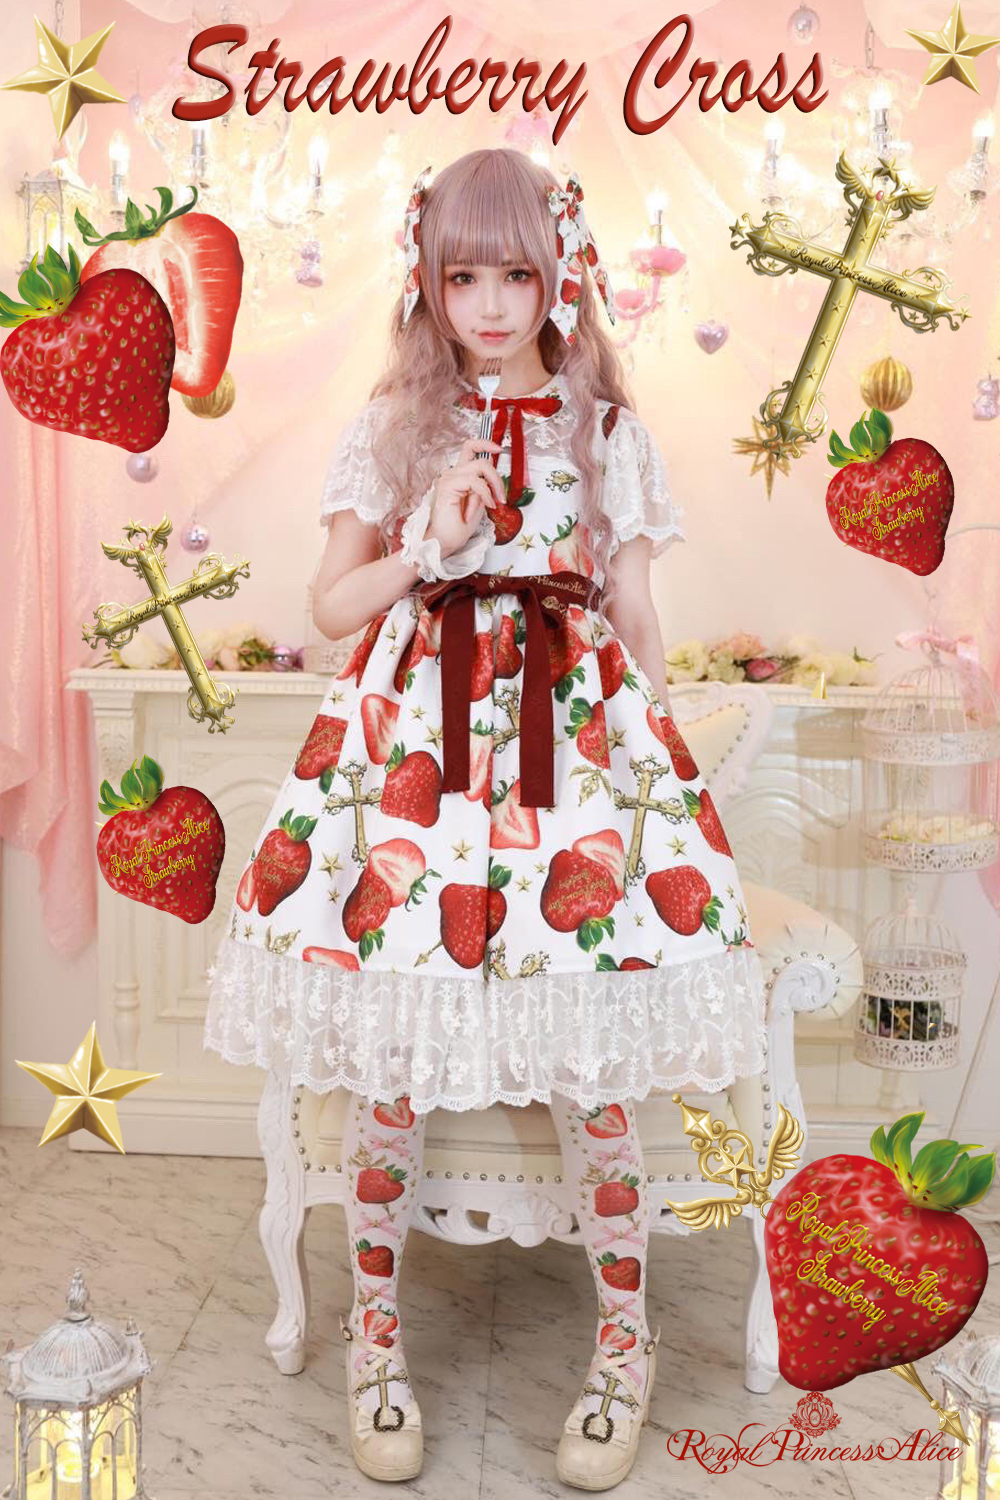 Strawberry Crossワンピース(白)【6月中旬より随時発送予定】